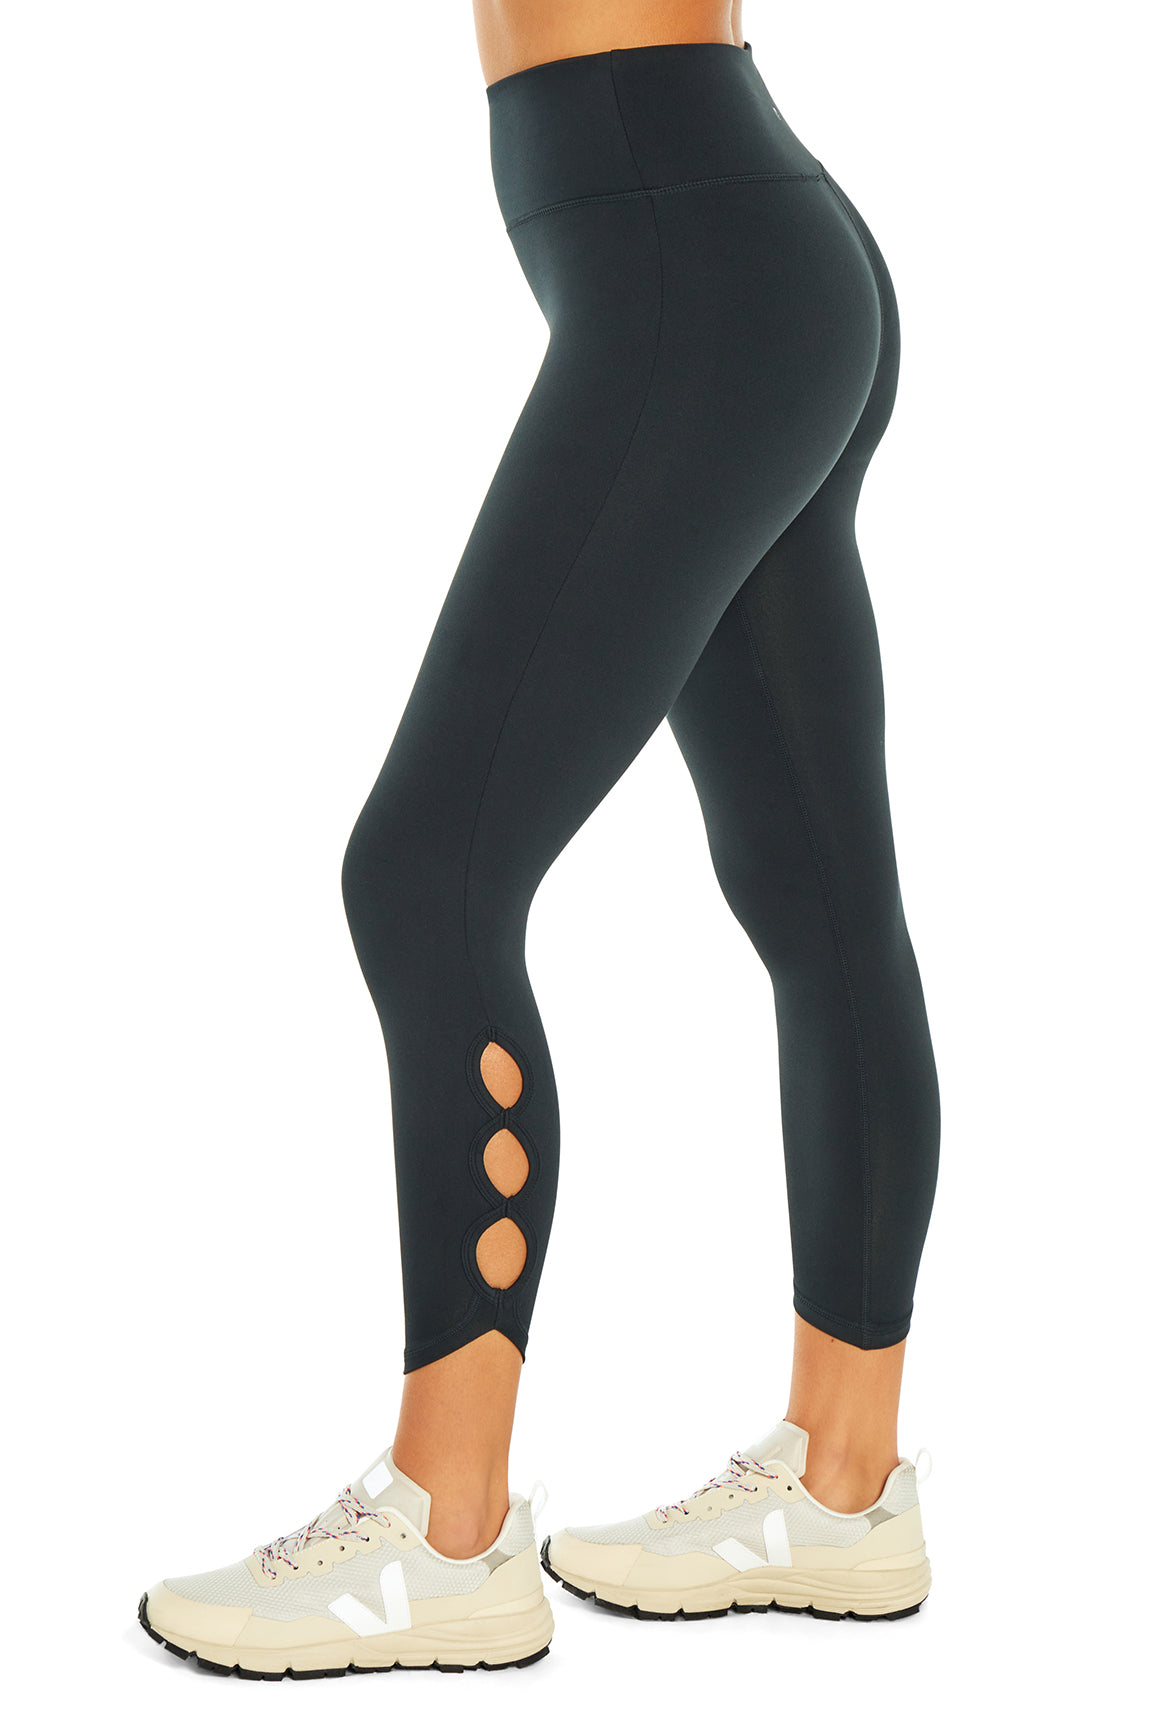 MARIKA, BALANCE FITNESS Balance Collection MIRANDA - 3/4 leggings - Women's  - black - Private Sport Shop